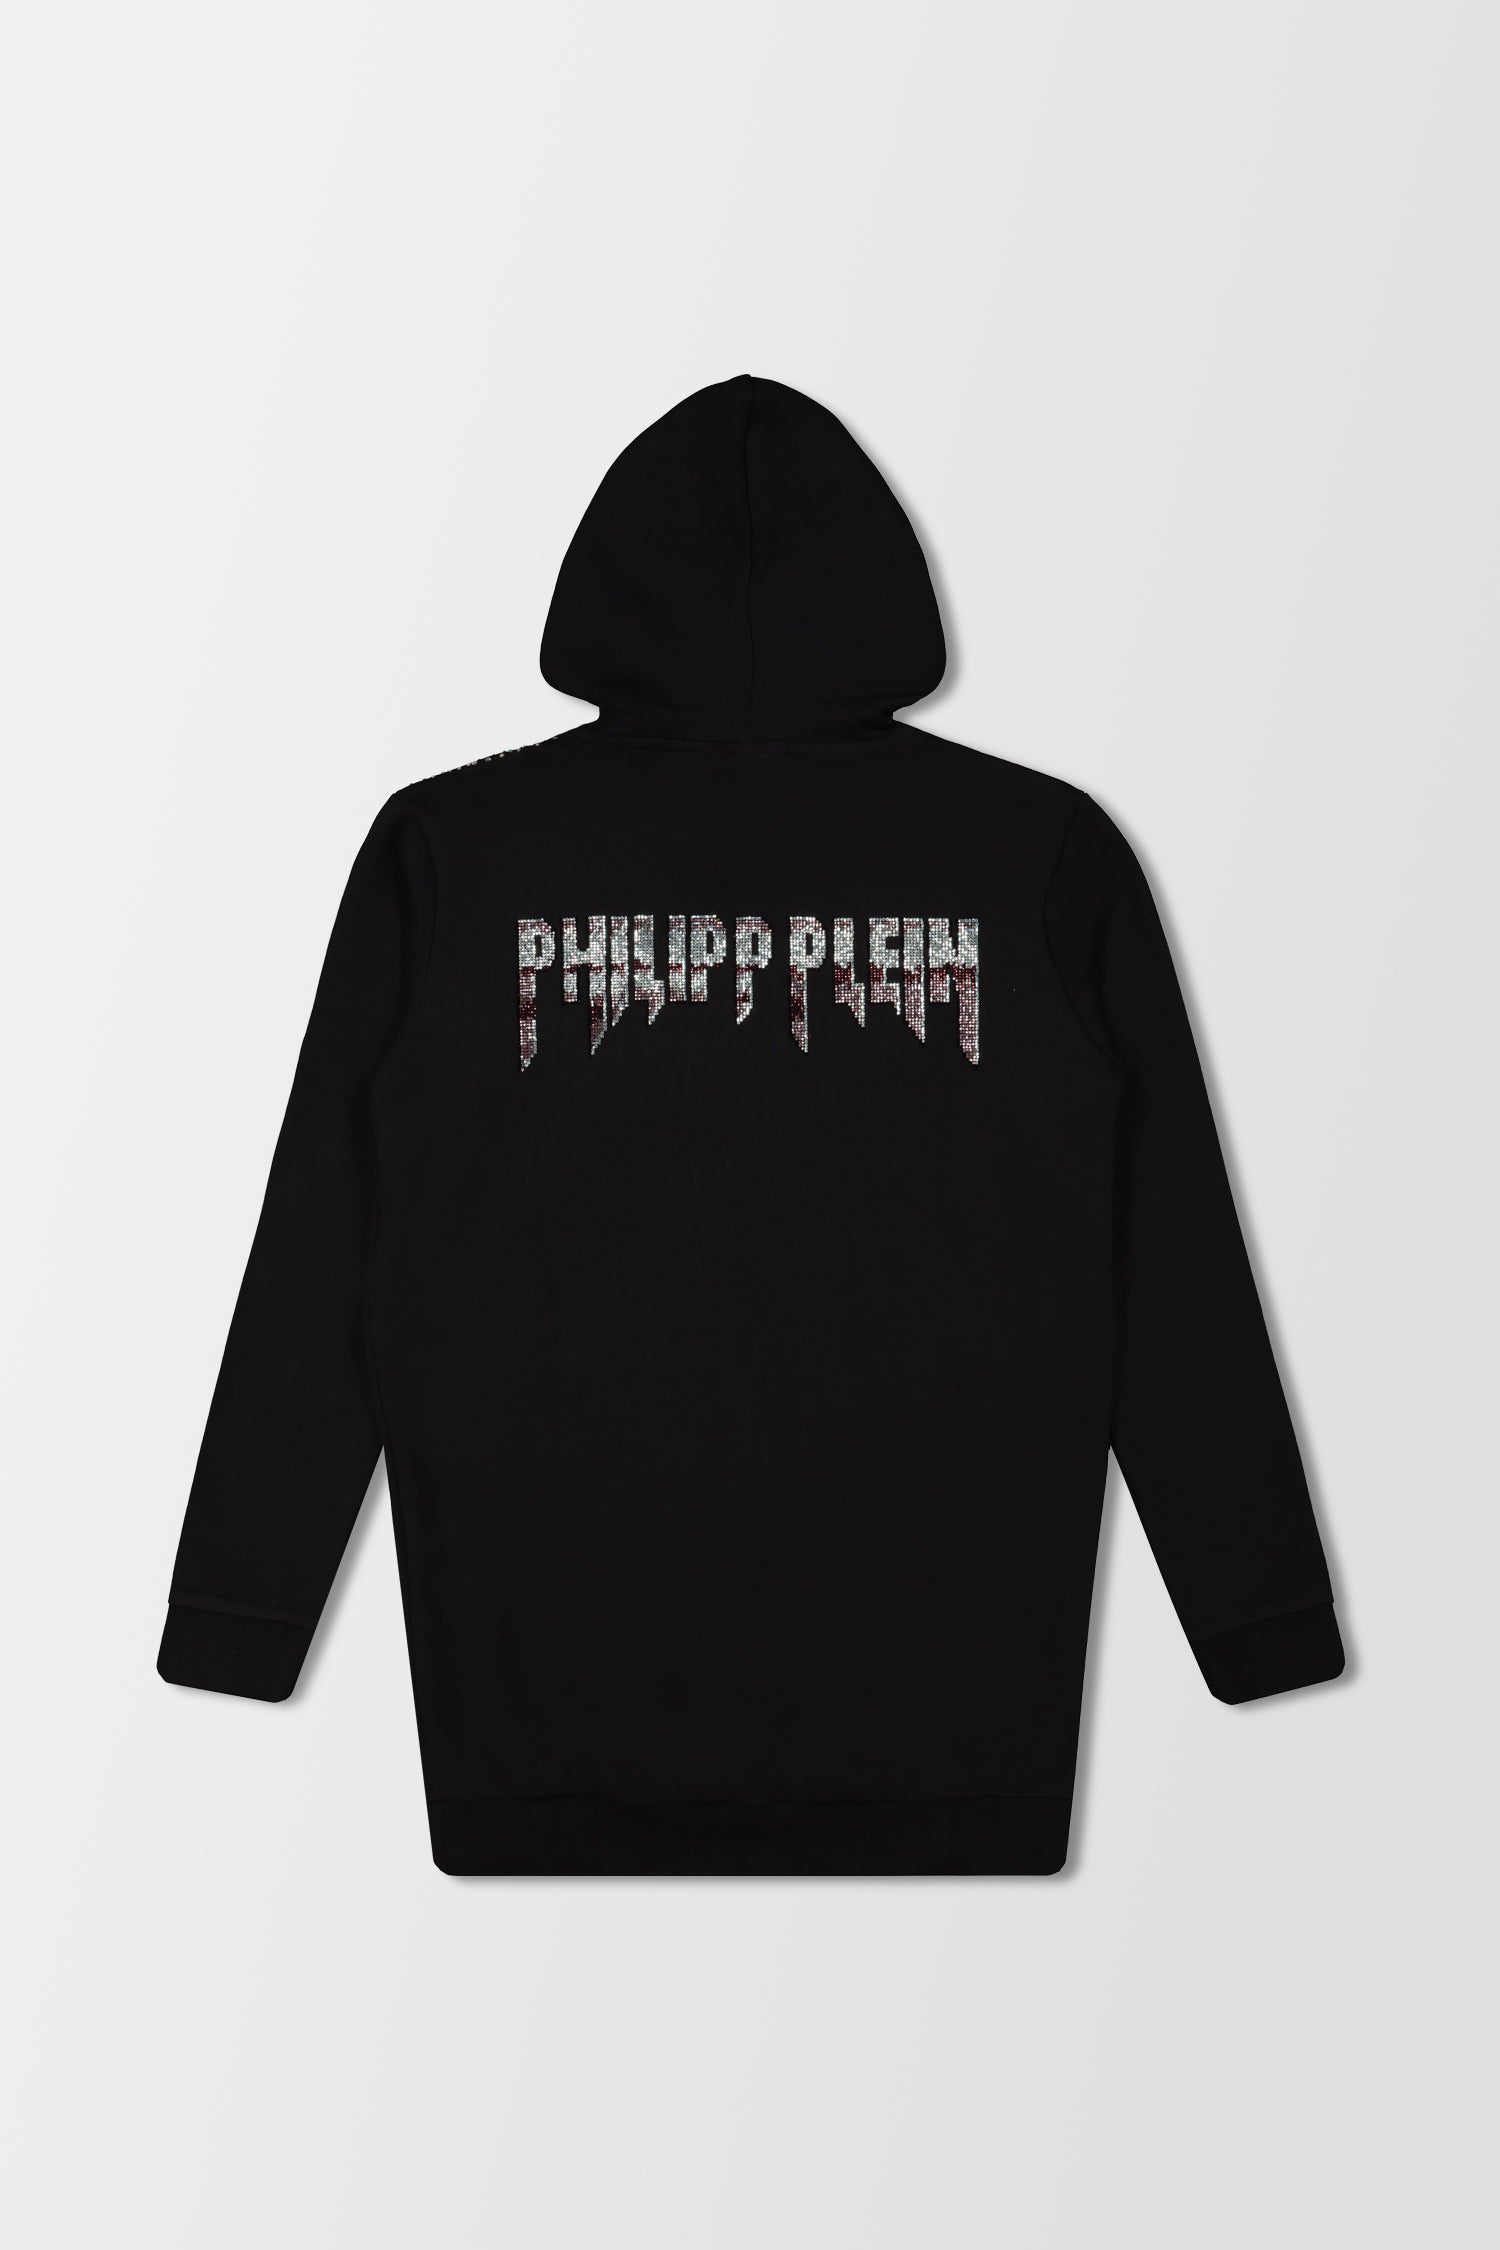 Philipp Plein Dress Rock B Black Hoodie Sweatshirt